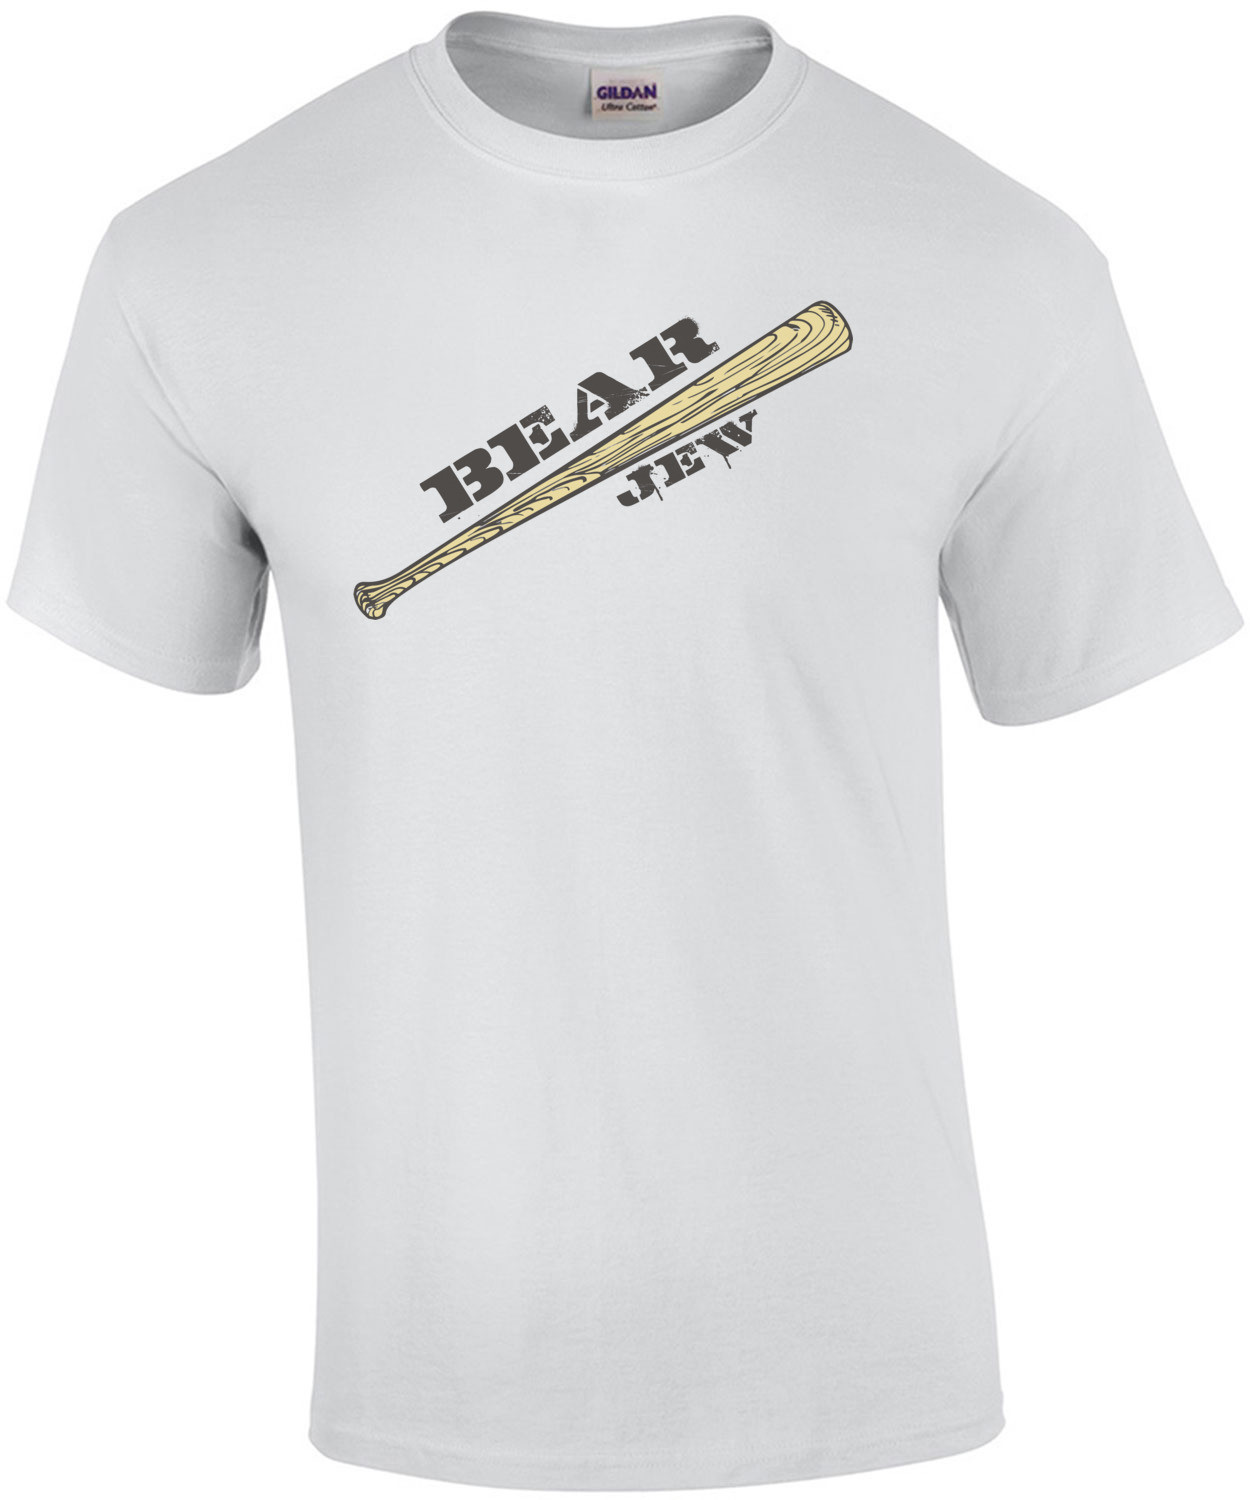 Bear Jew - Inglourious Basterds T-Shirt